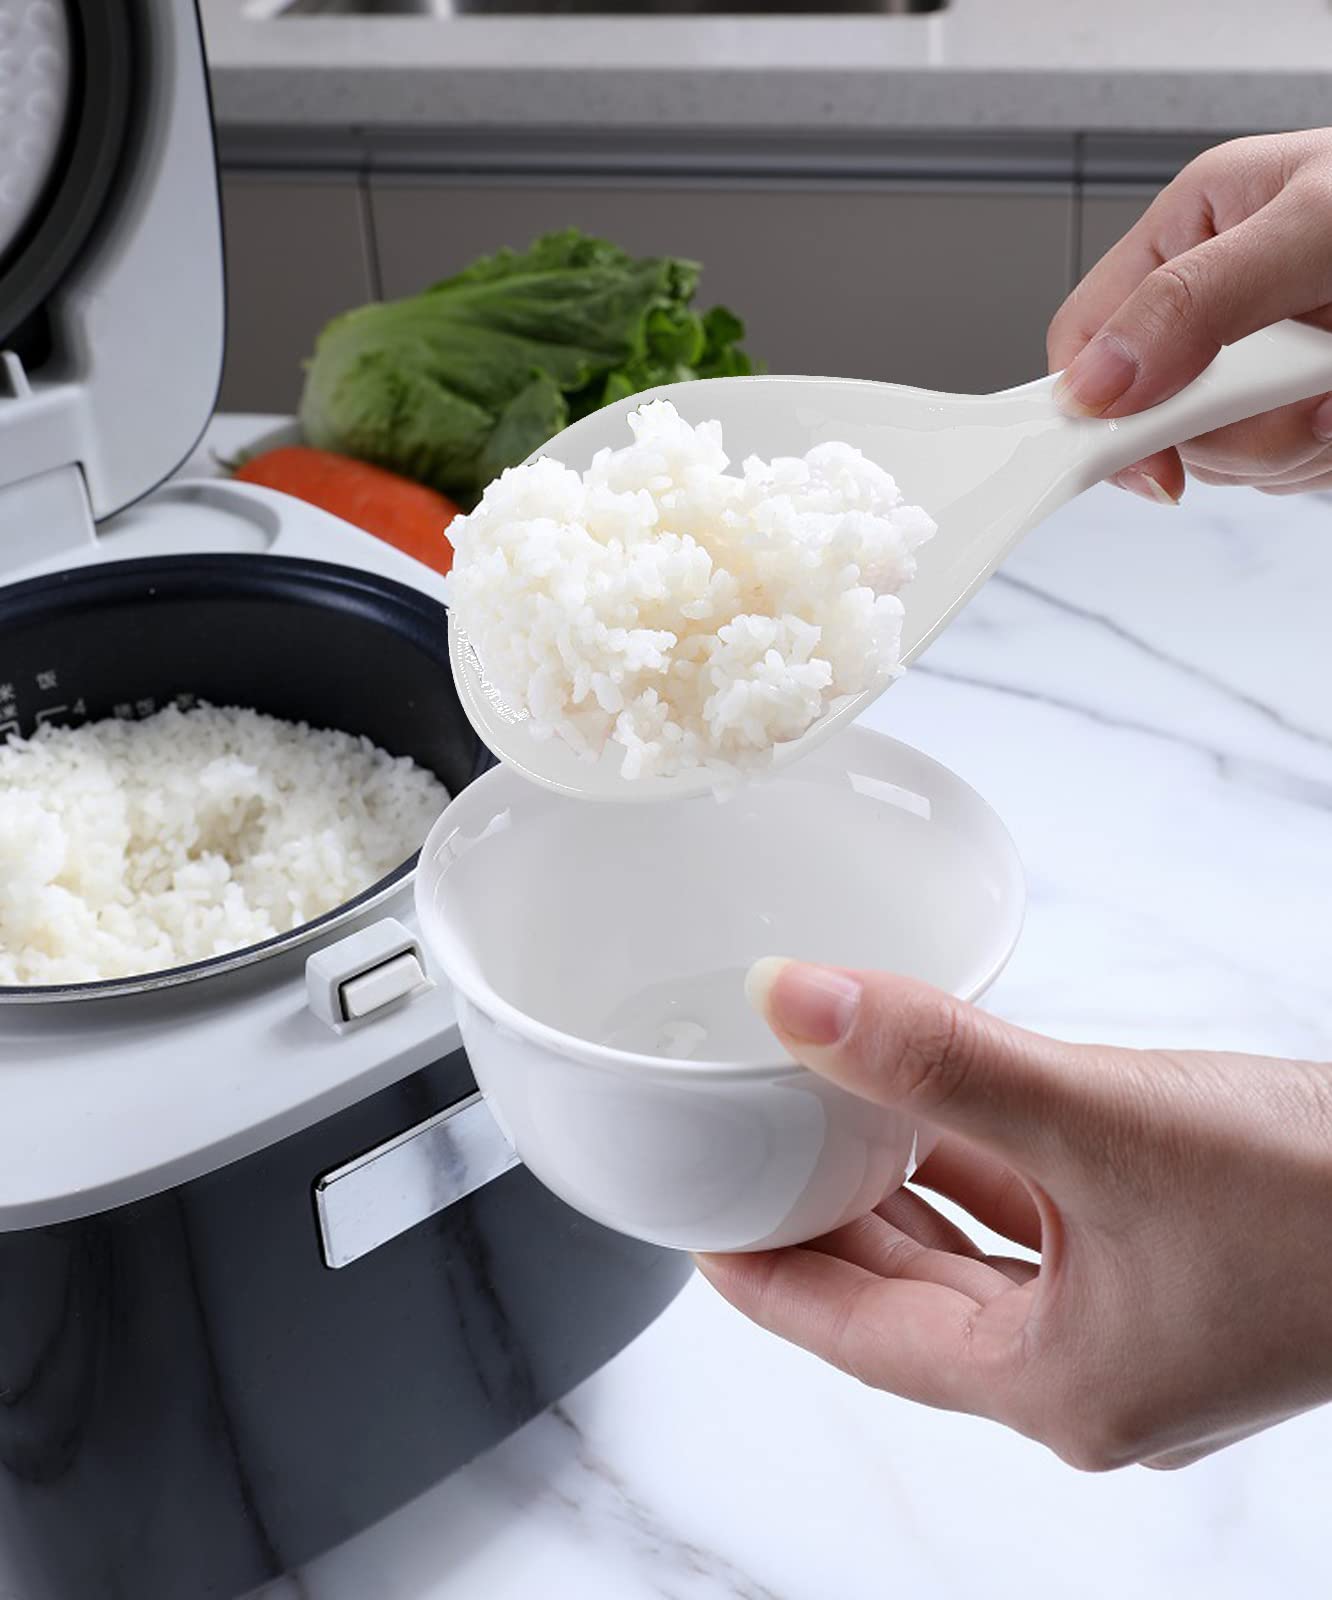 Cionyce 2PCS Plastic Rice Paddle Spoon Rice Scoop, Non-Stick Rice Spatula Rice Cooker Shovel Rice Serving Spoon 7.87 Inch (White E)